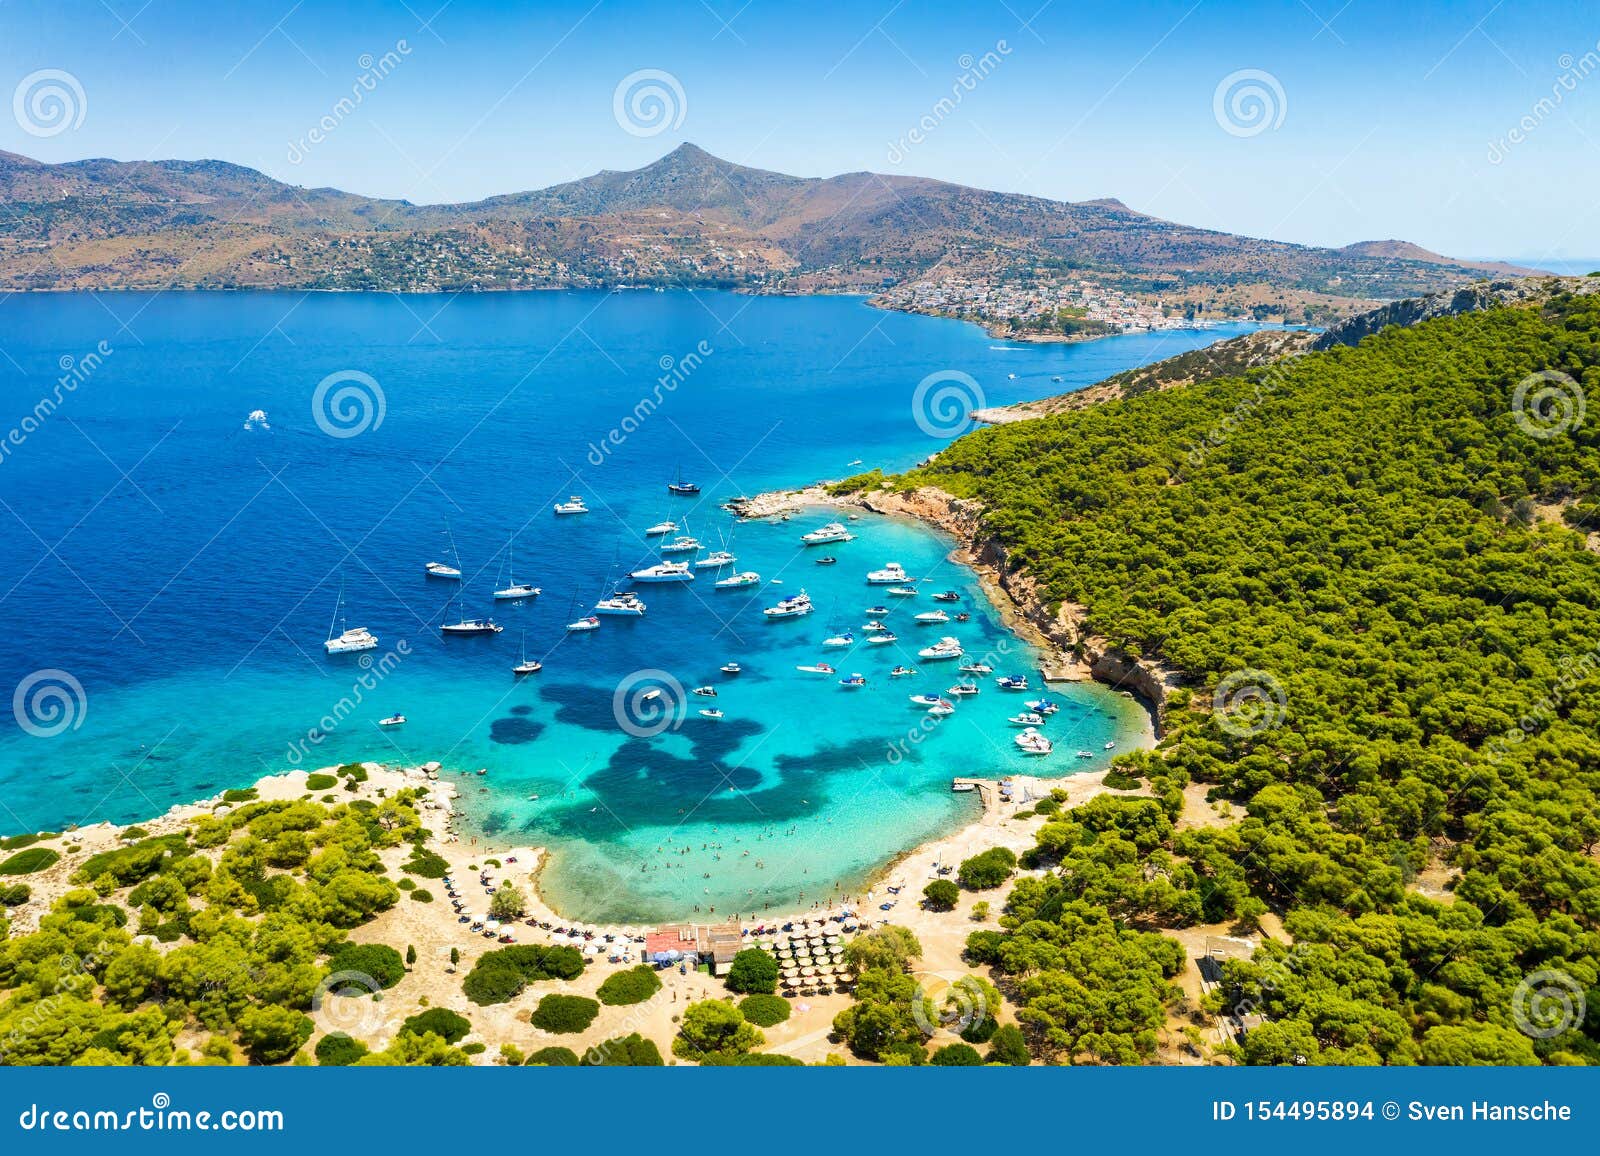 aerial view to moni island, saronic gulf, greece